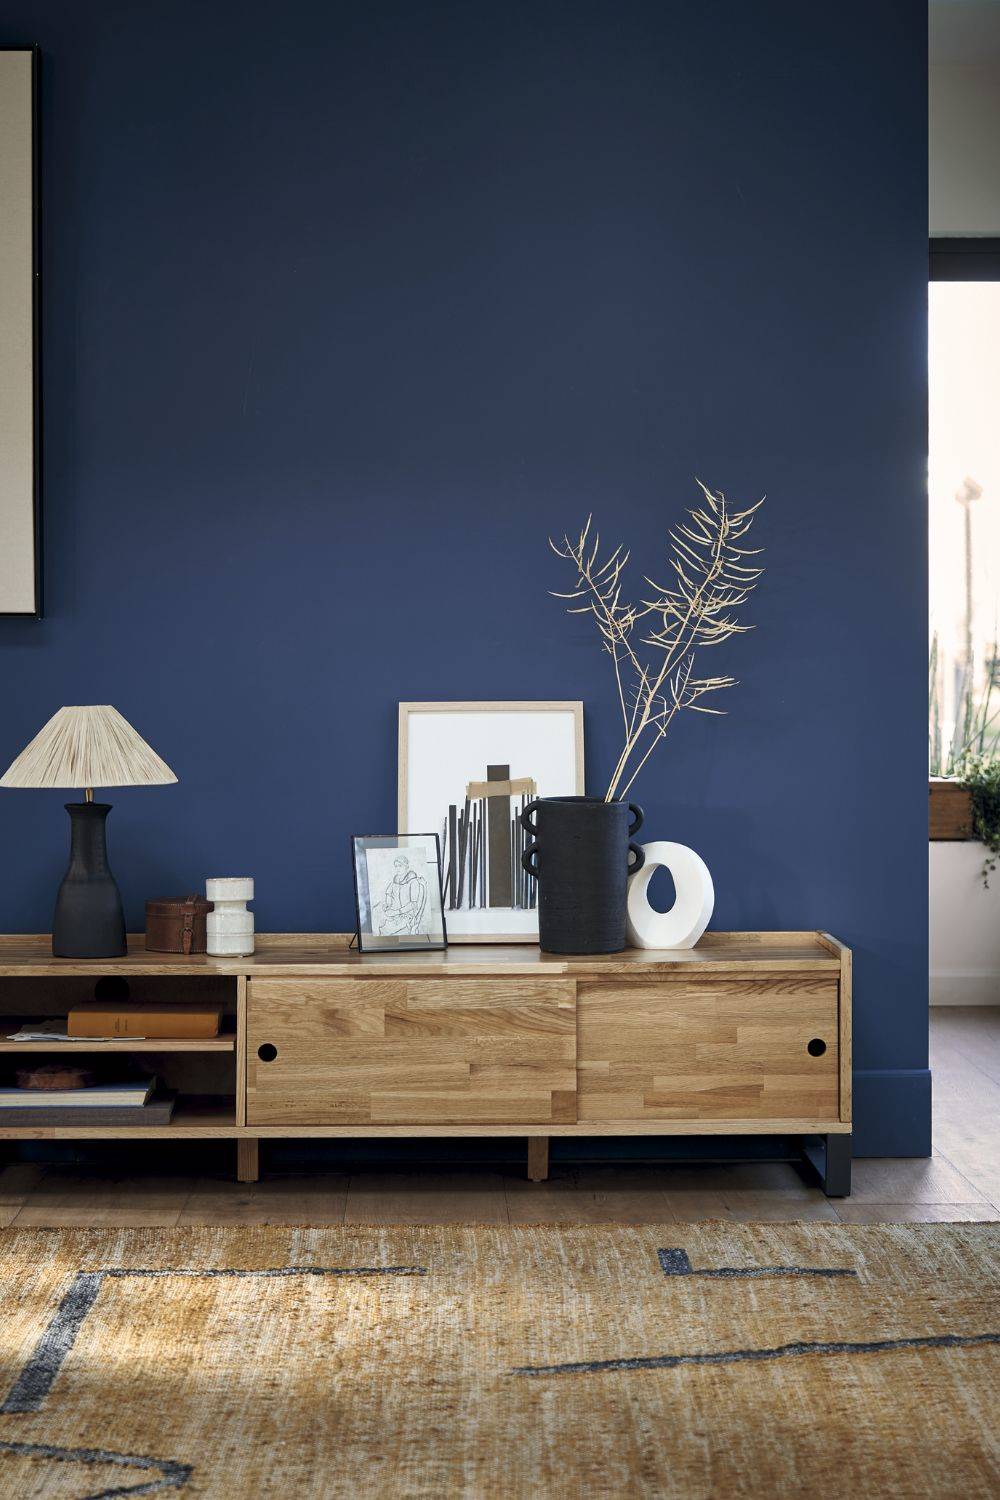 Últimas tendencias en decoración de paredes: Azul.